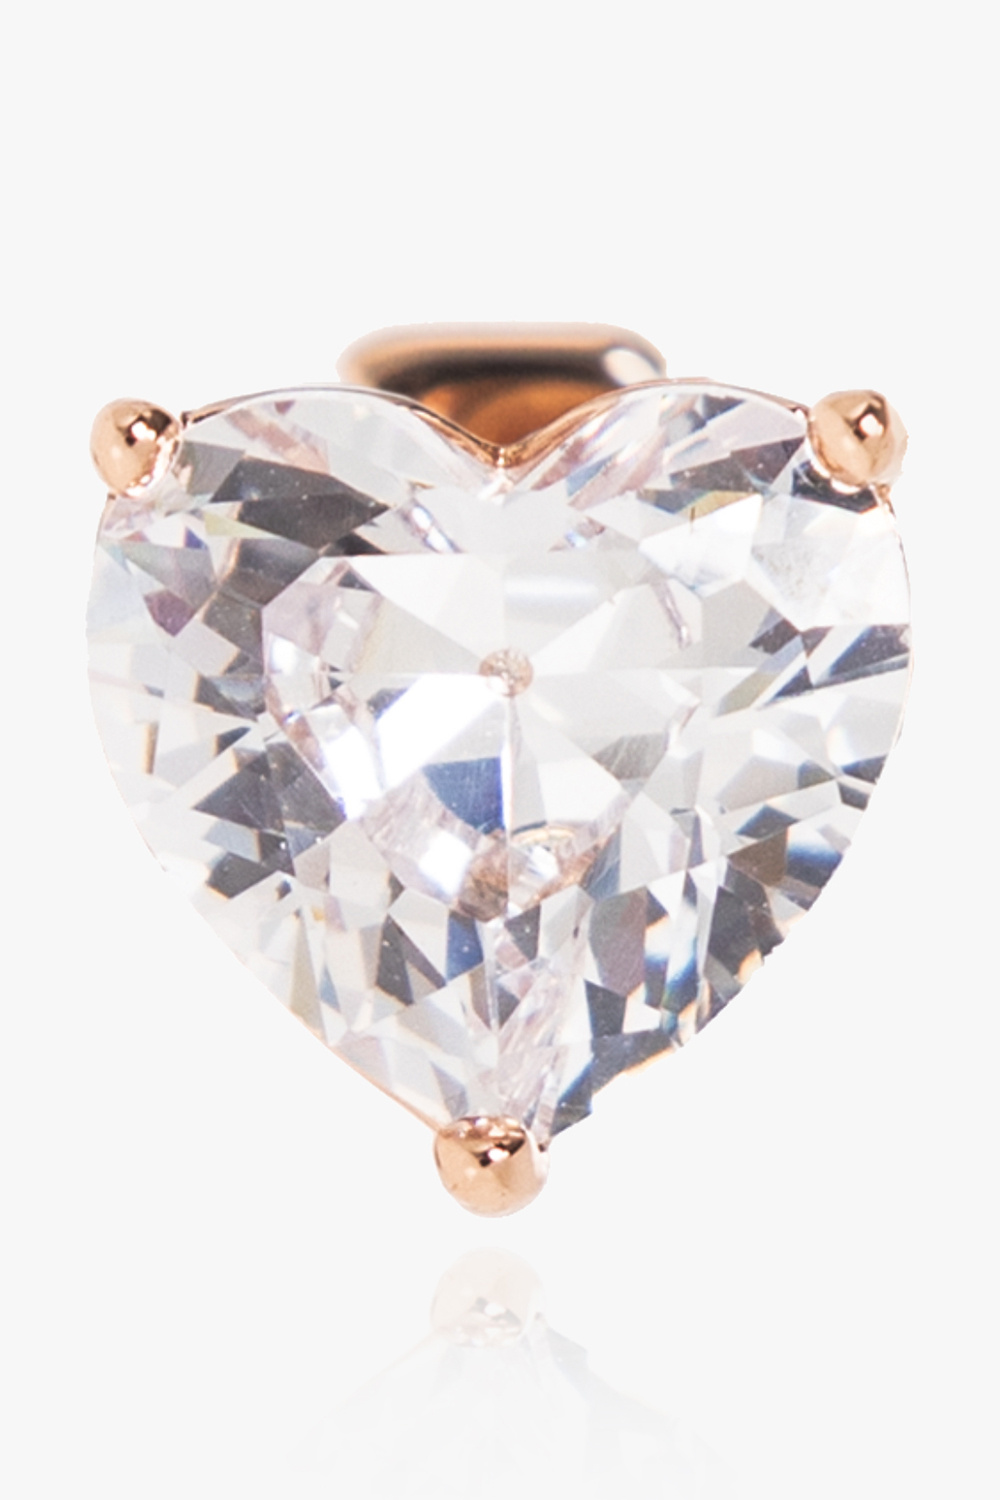 Kate Spade Heart-shaped earrings